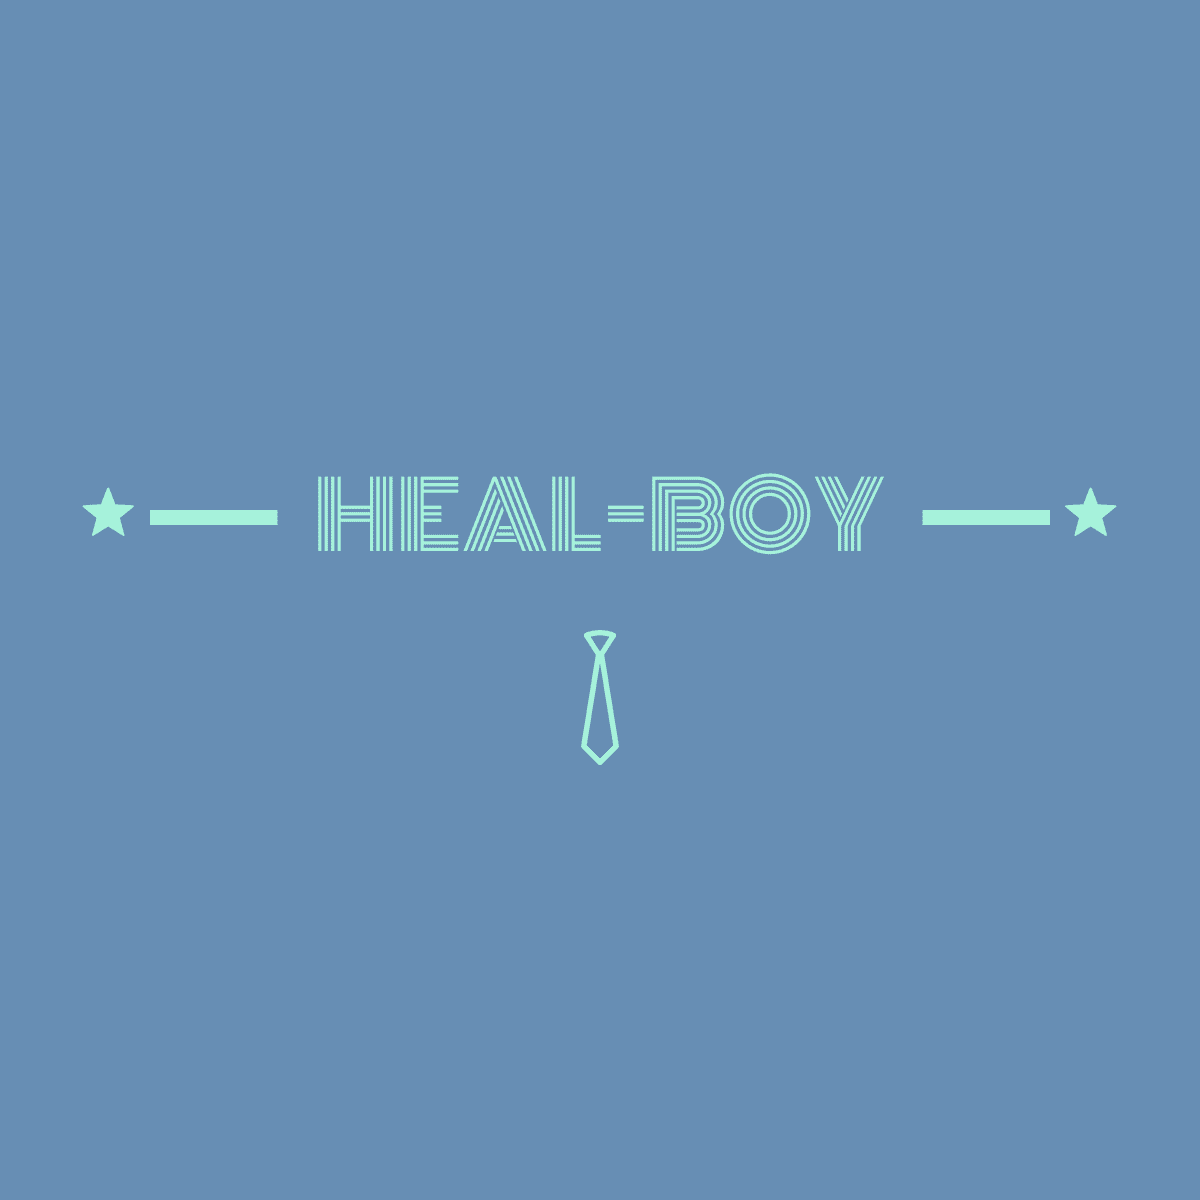 HEAL-BOY